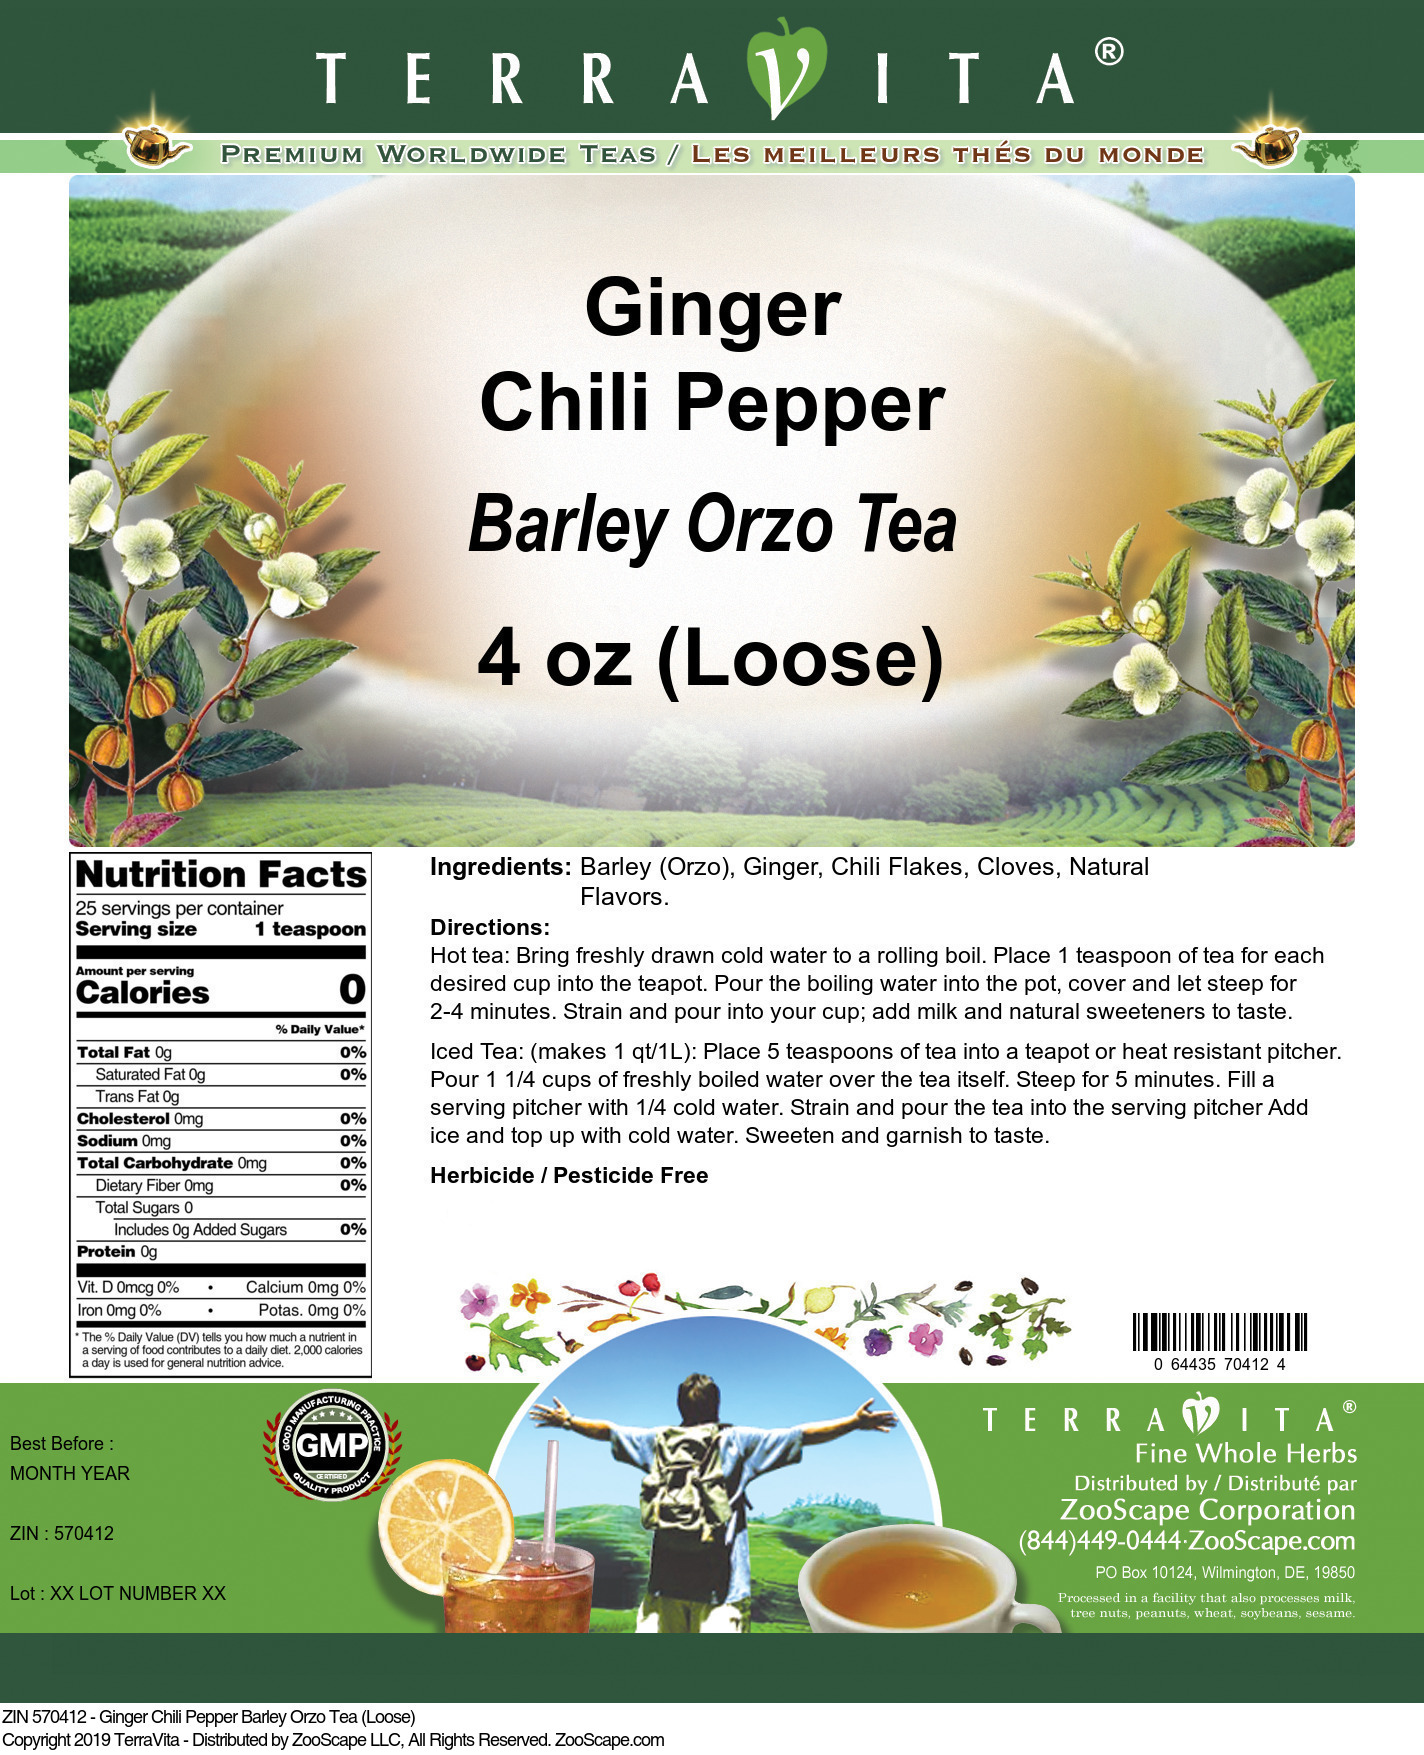 Ginger Chili Pepper Barley Orzo Tea (Loose) - Label